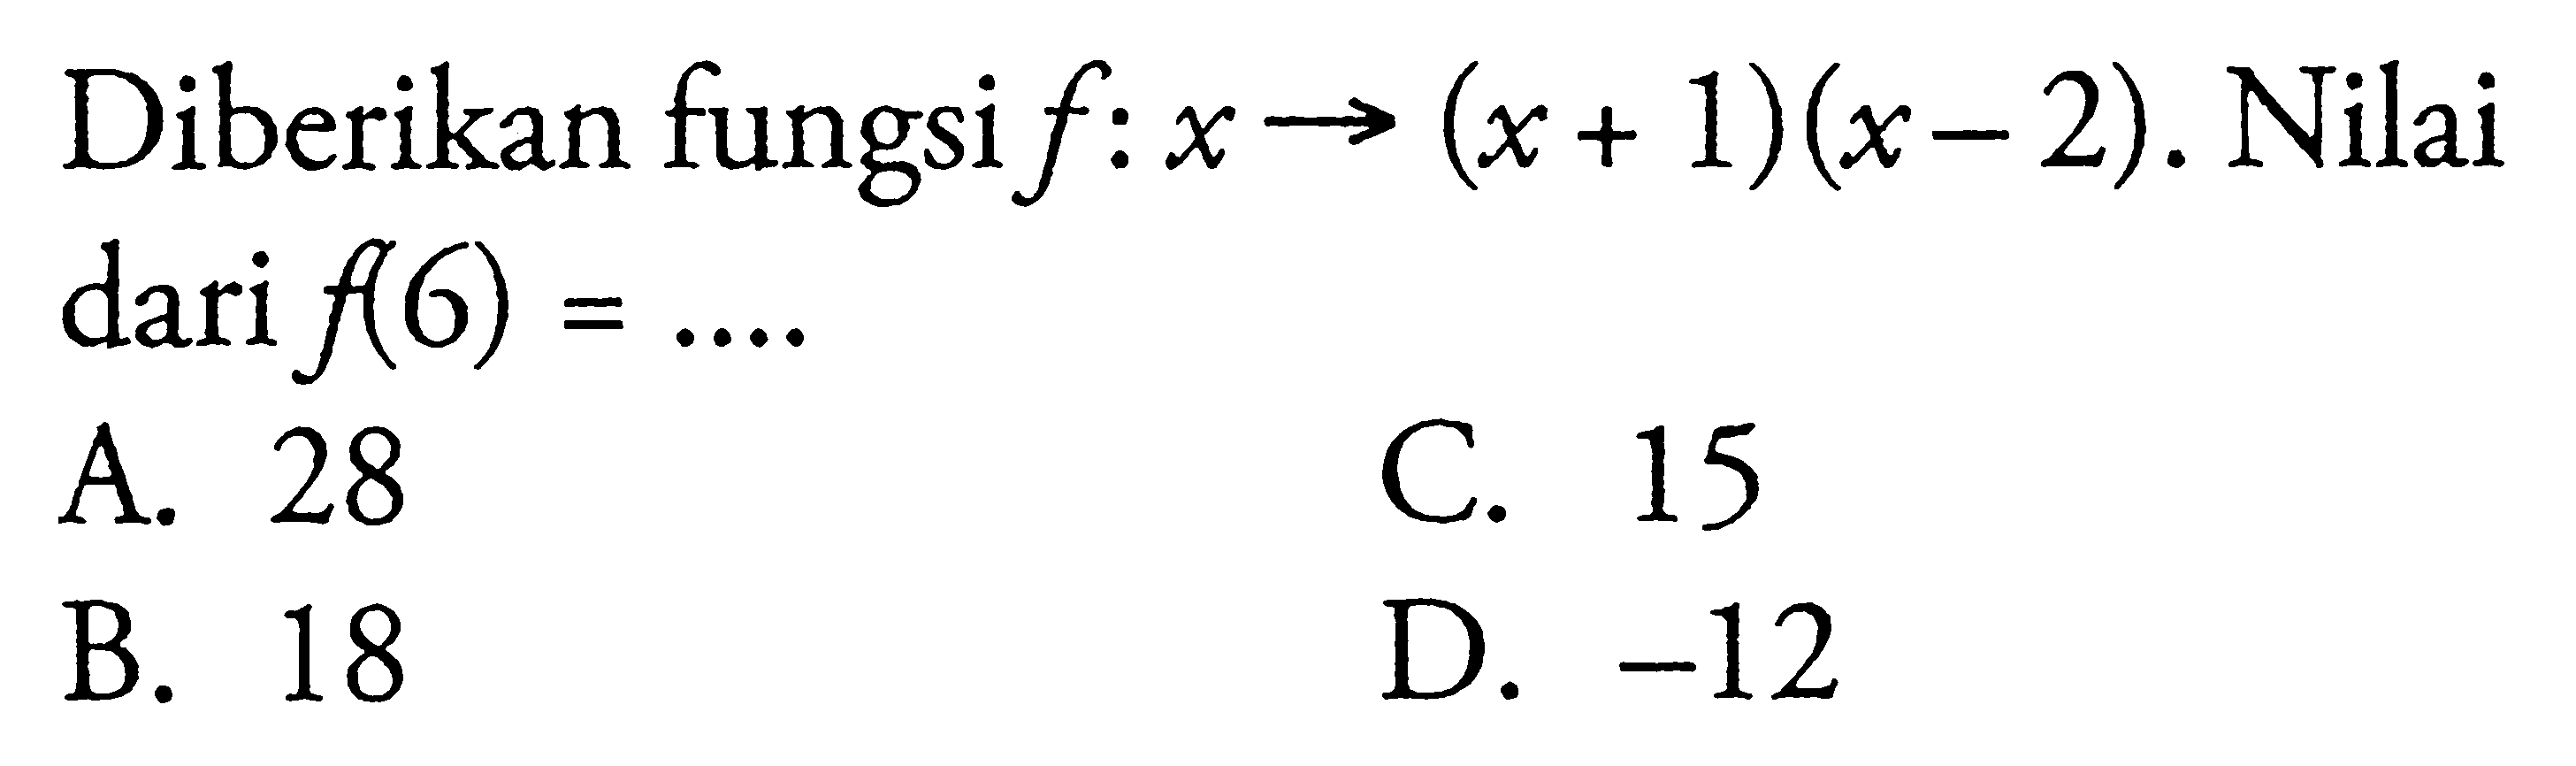 Diberikan fungsi f: x -> (x+ 1)(x - 2). Nilai dari f(6) = ..